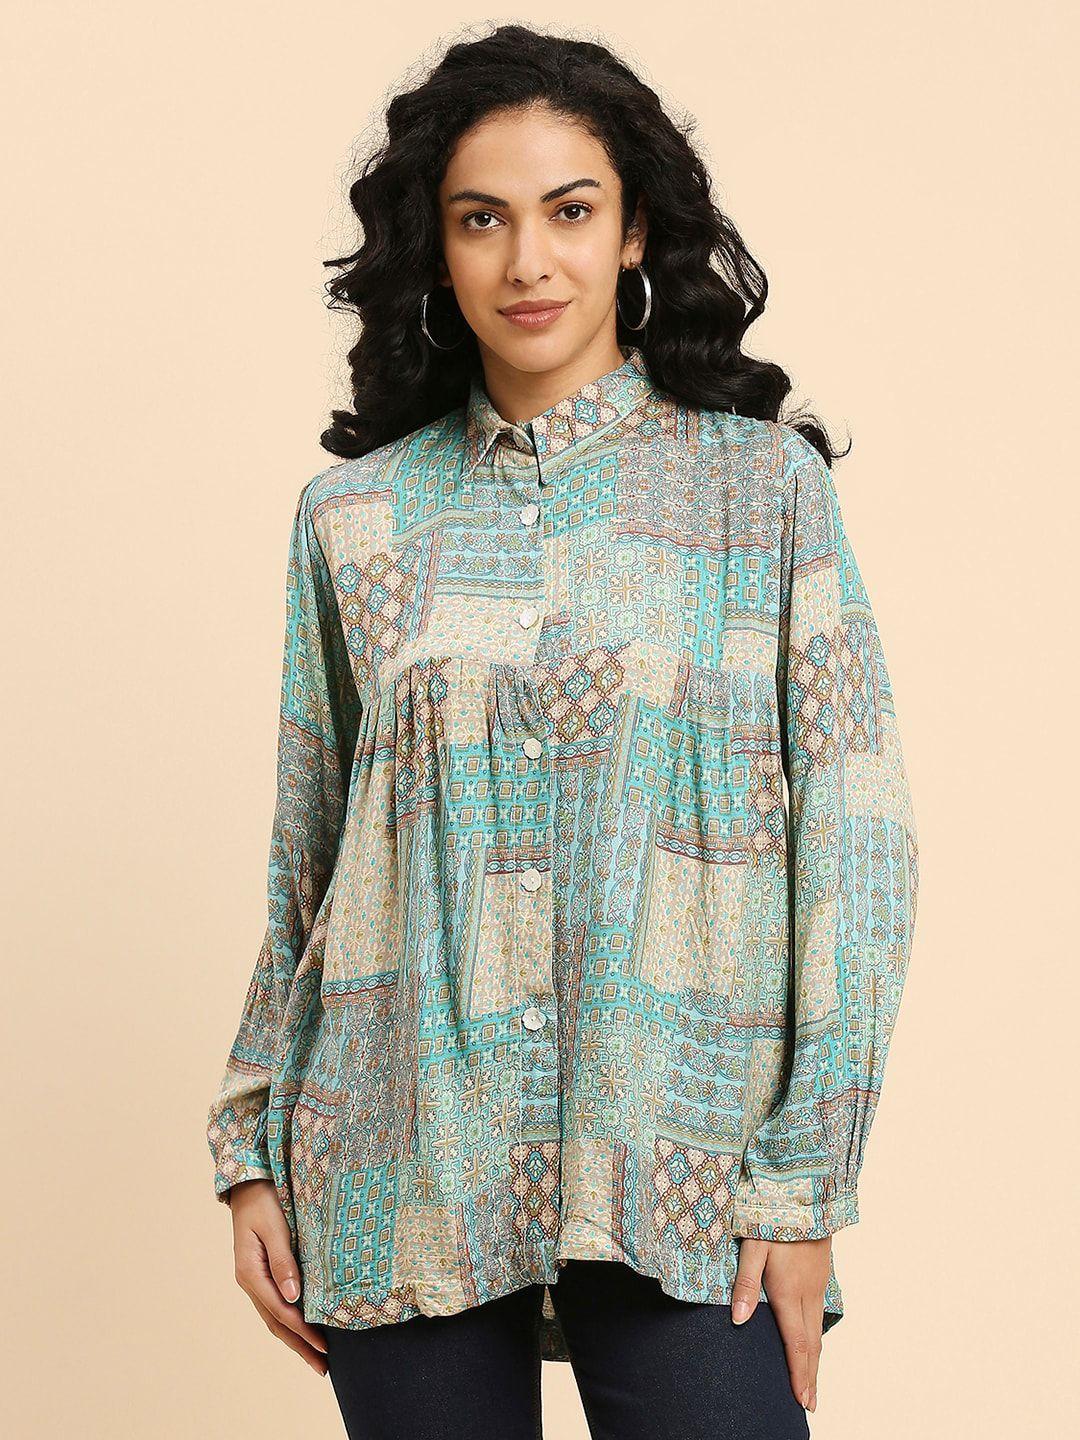 gufrina-ethnic-motif-printed-shirt-collar-gathered-&-pleated-shirt-style-top